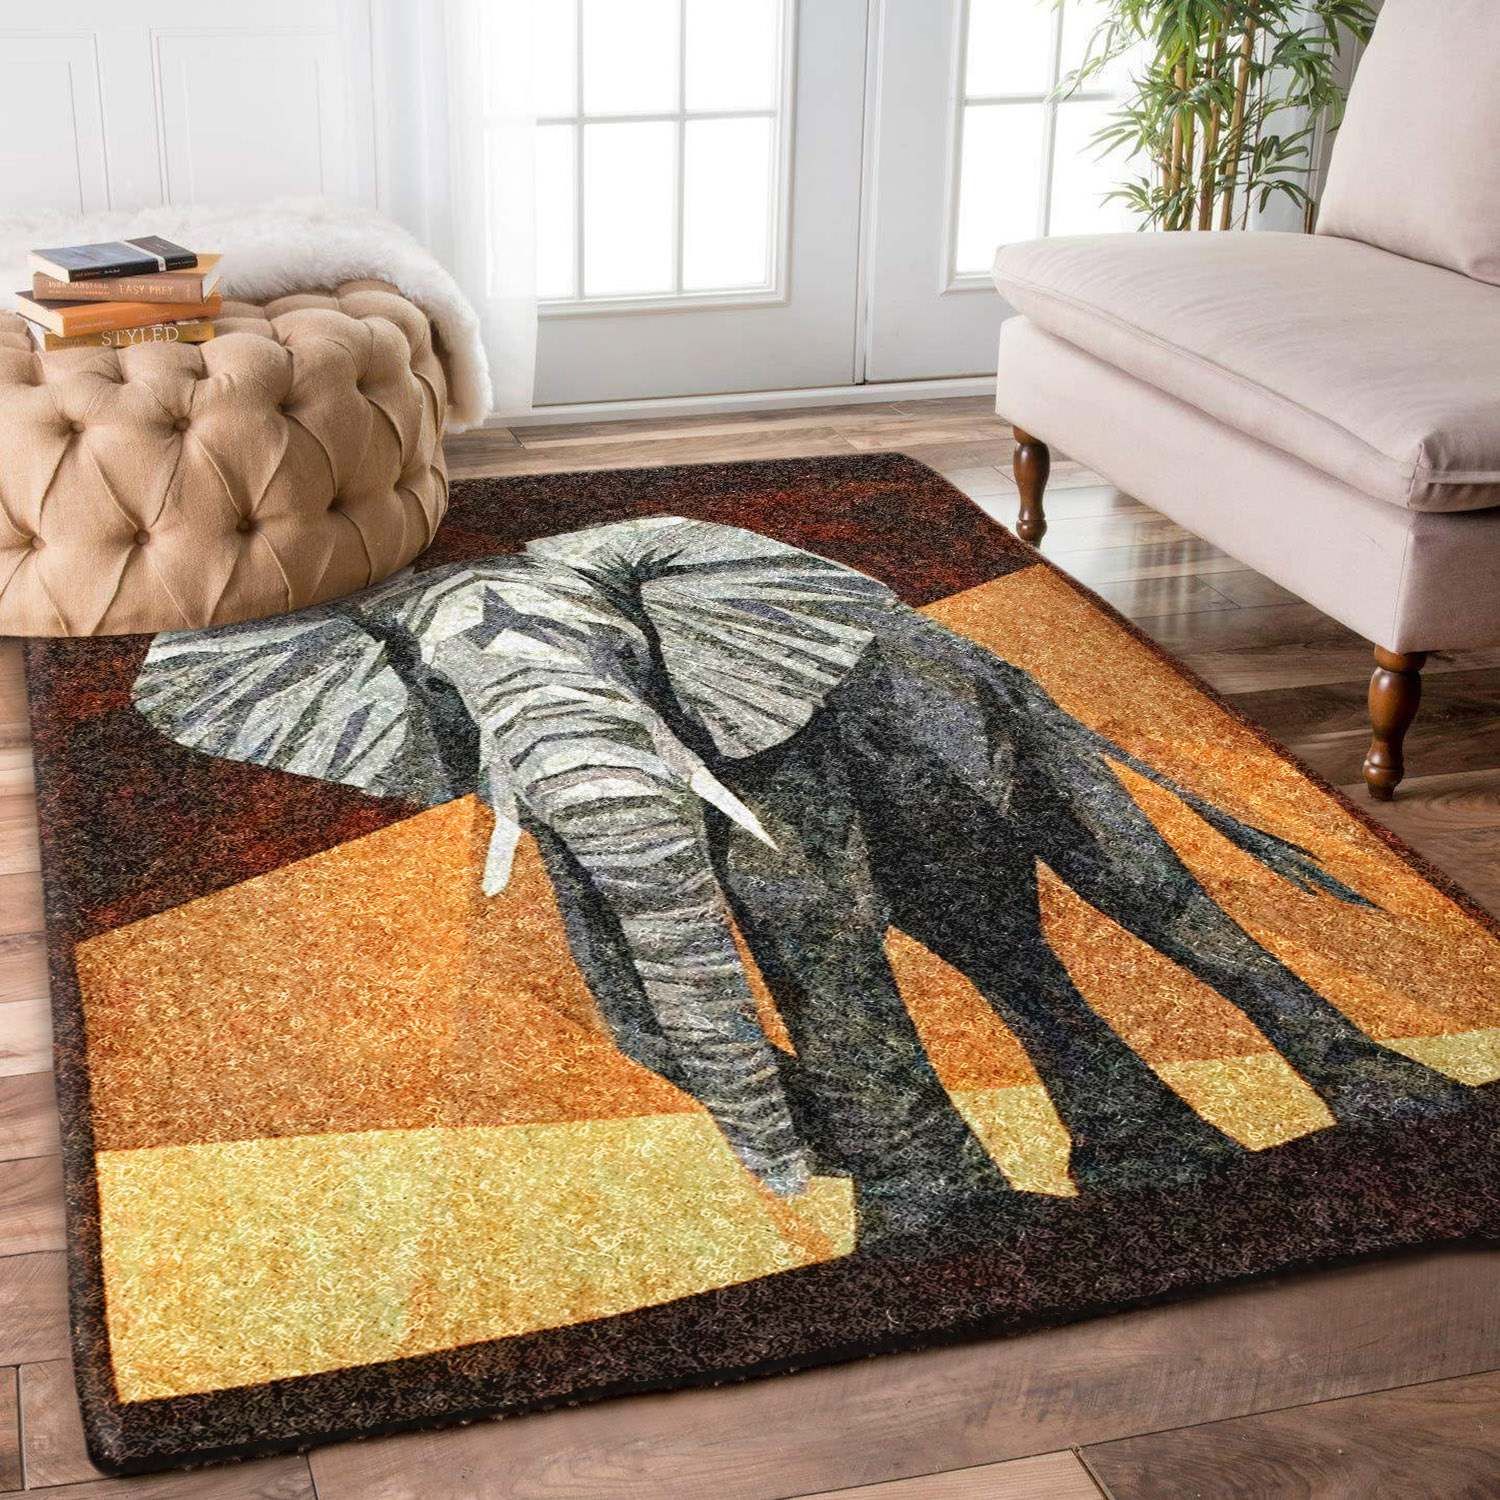 Elephant Print animal print carpet